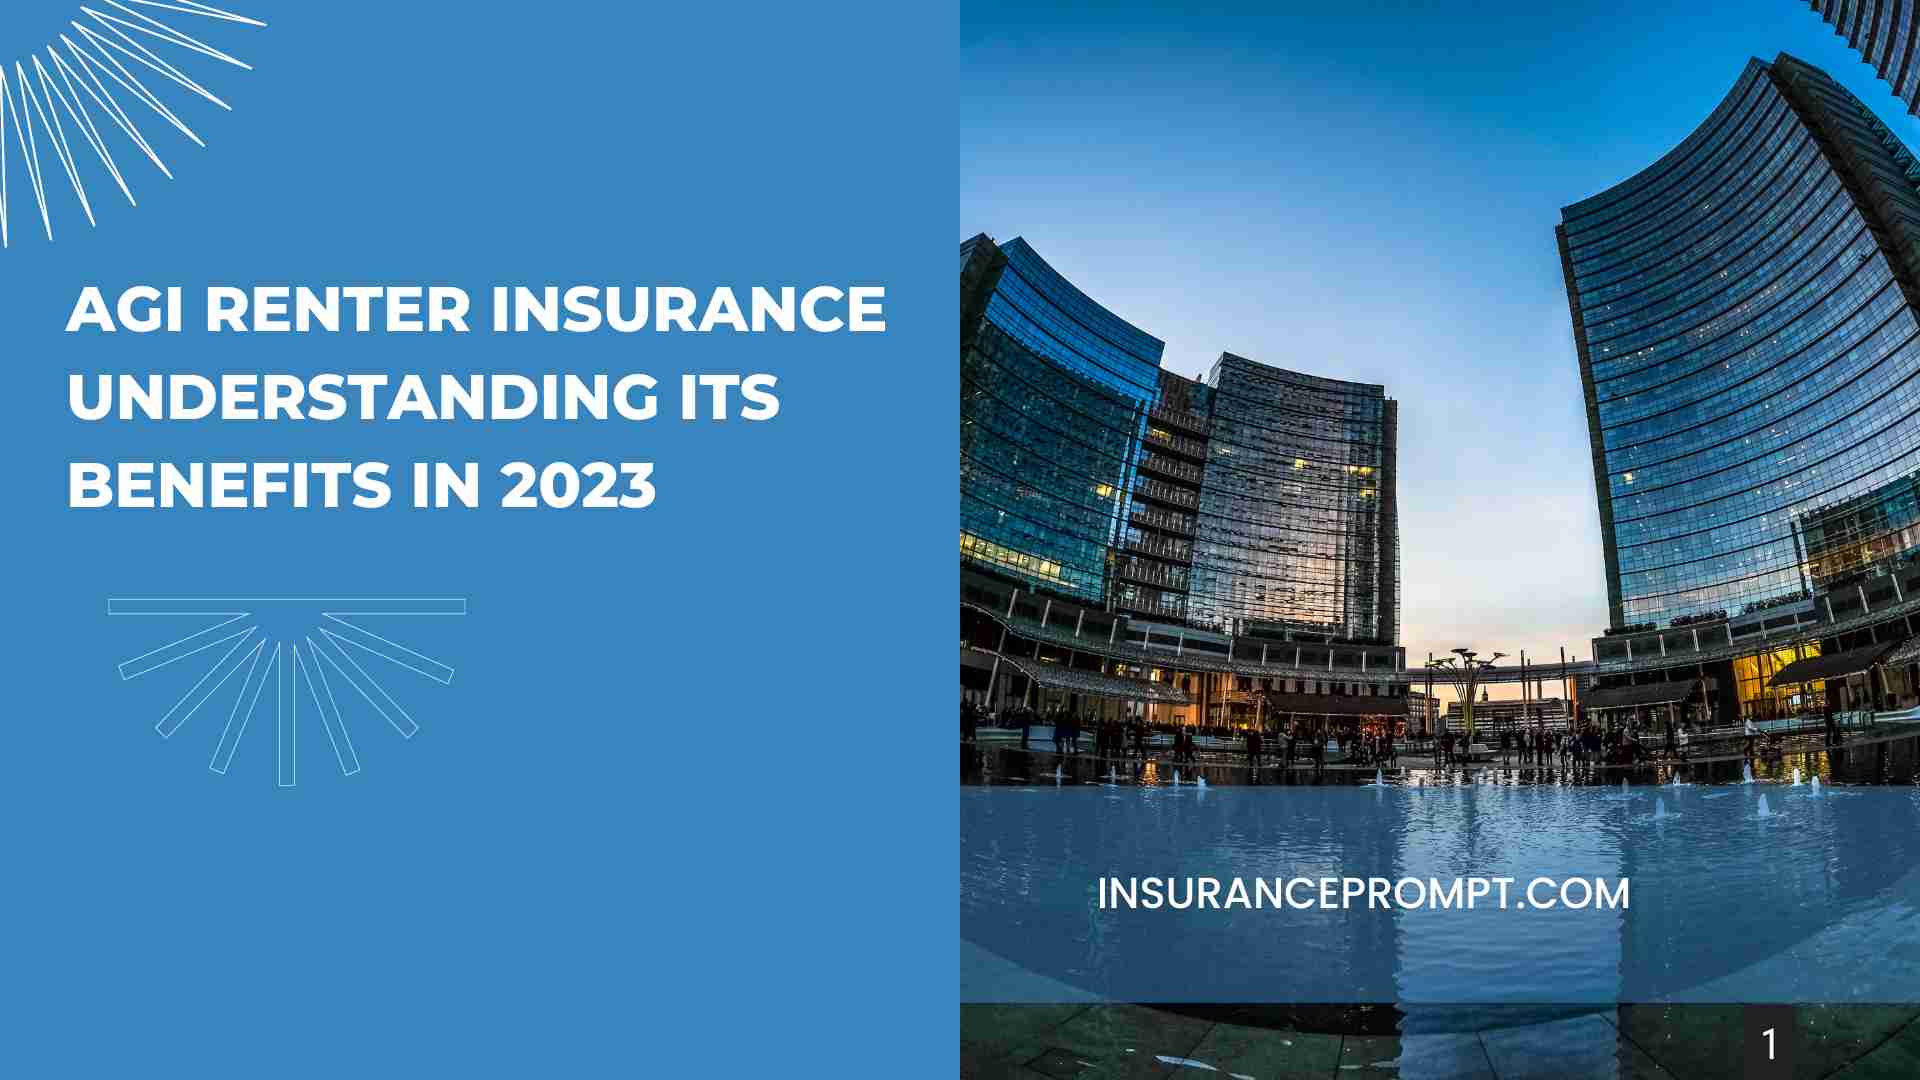 AGI Renter Insurance 2023: Coverage& Benefits Ultimate Guide